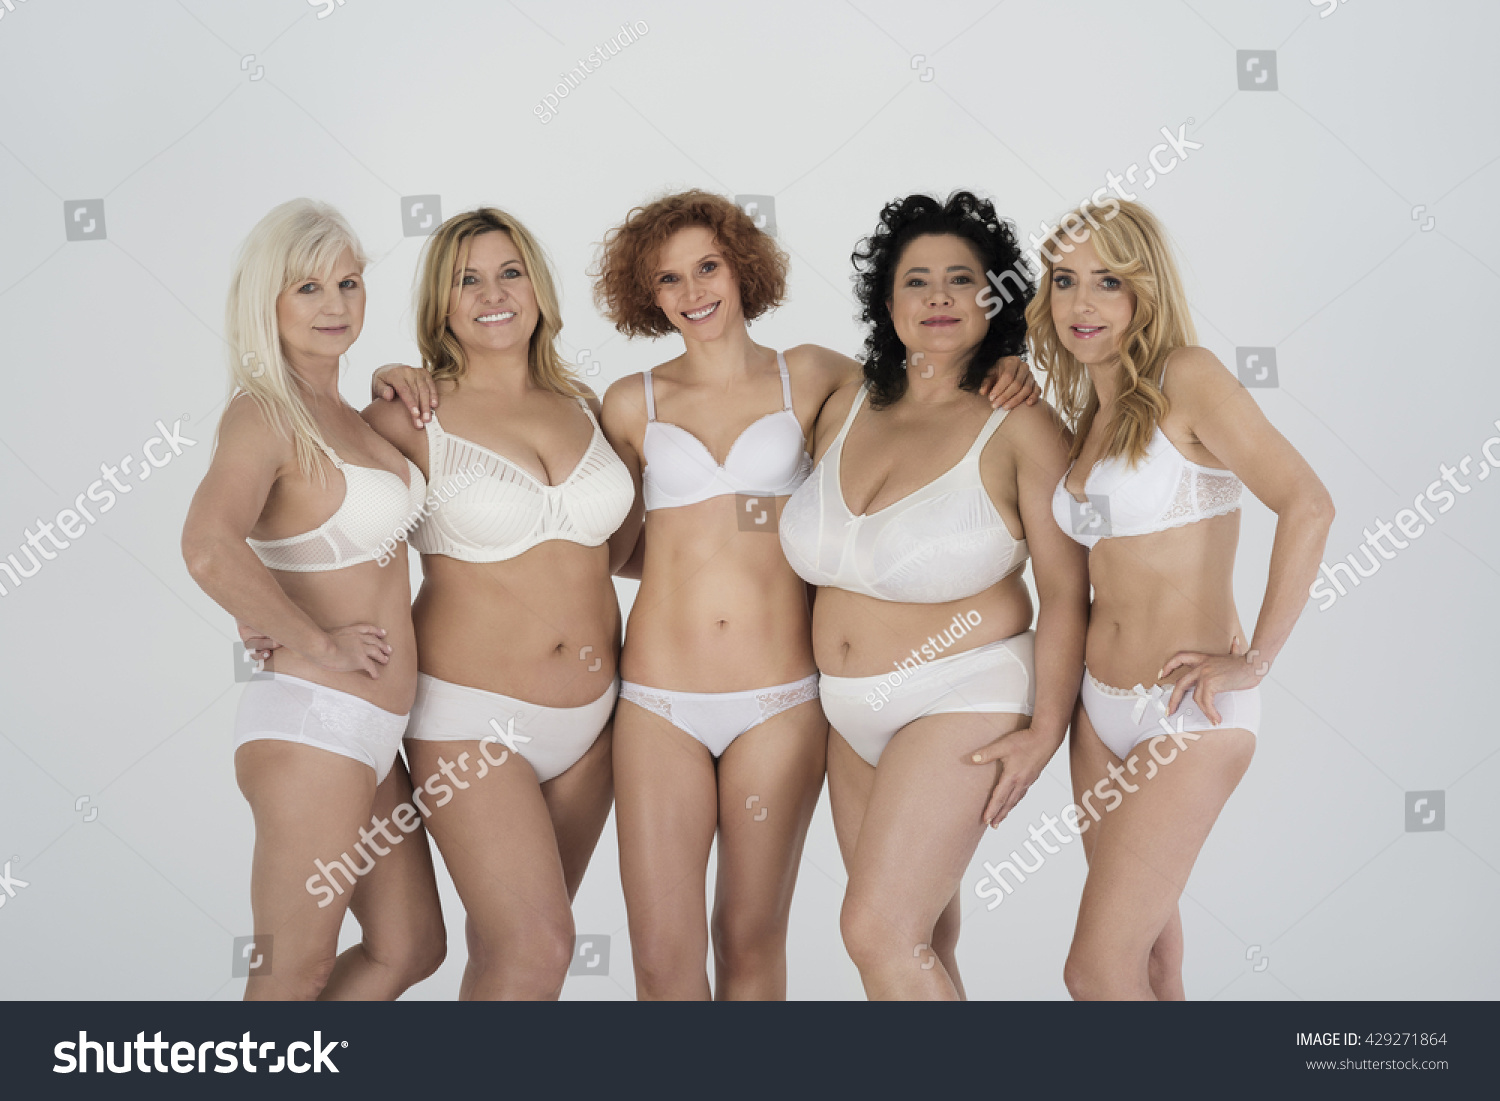 Natural Mature Nude Women Groups